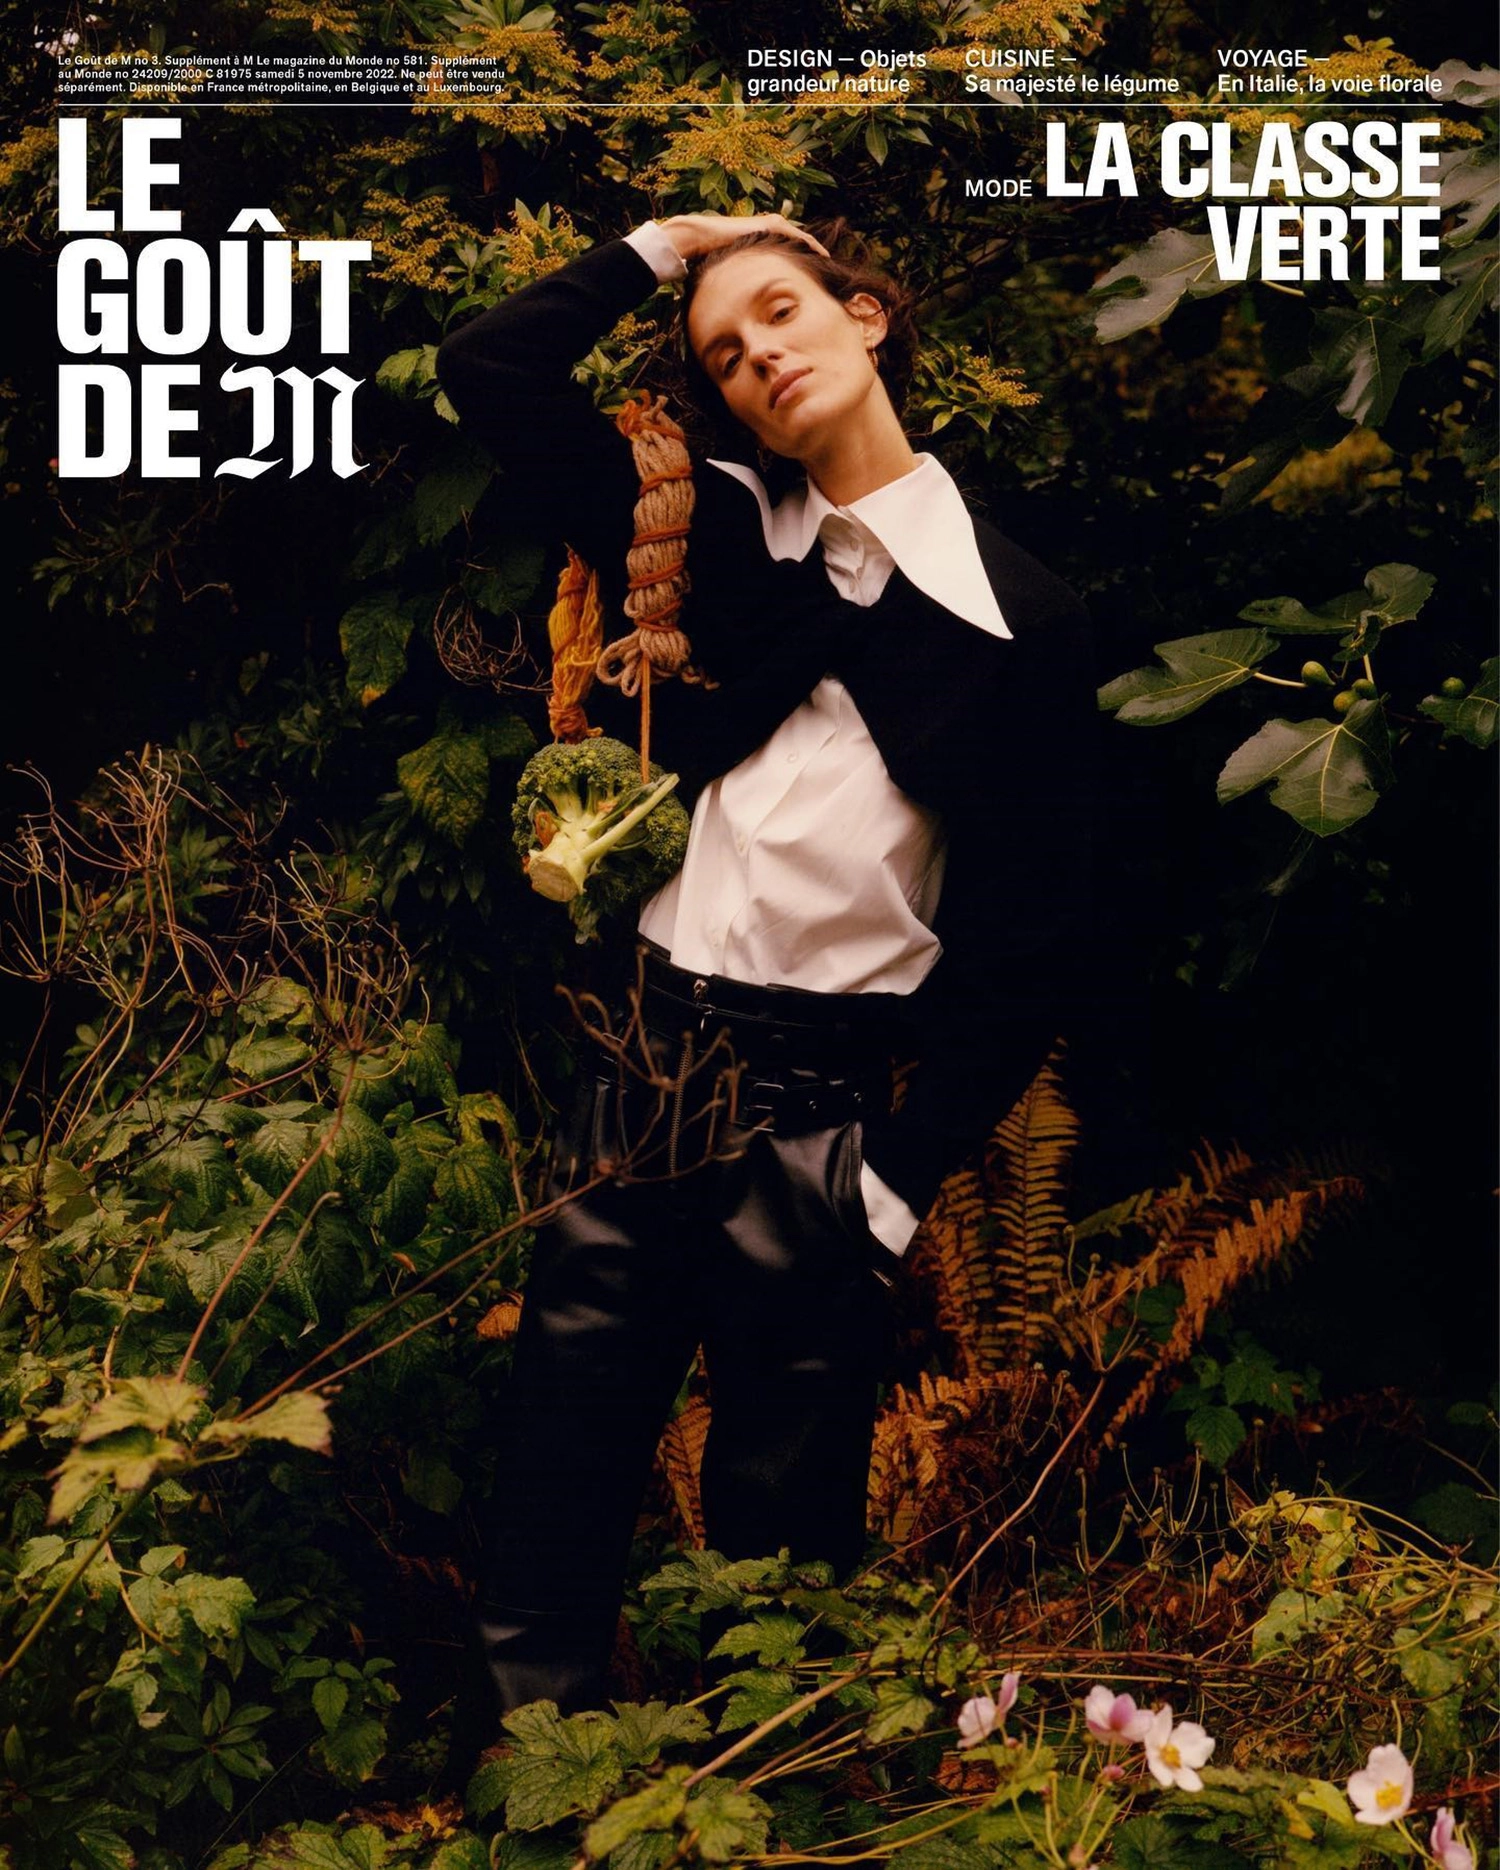 Marte Mei van Haaster covers Le Goût de M November 5th, 2022 by Colin Dodgson